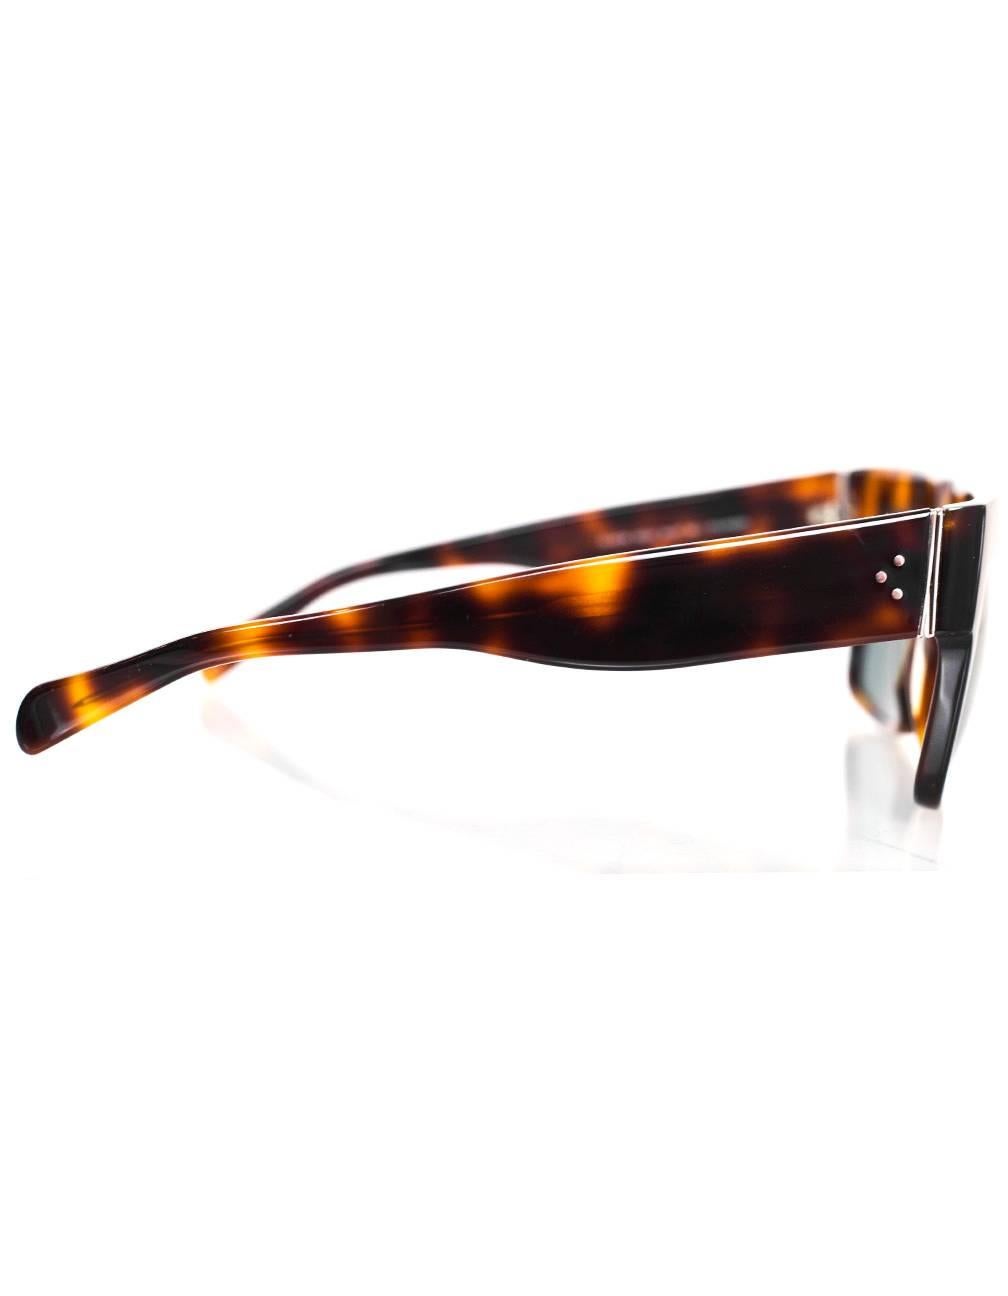 zz top sunglasses for sale